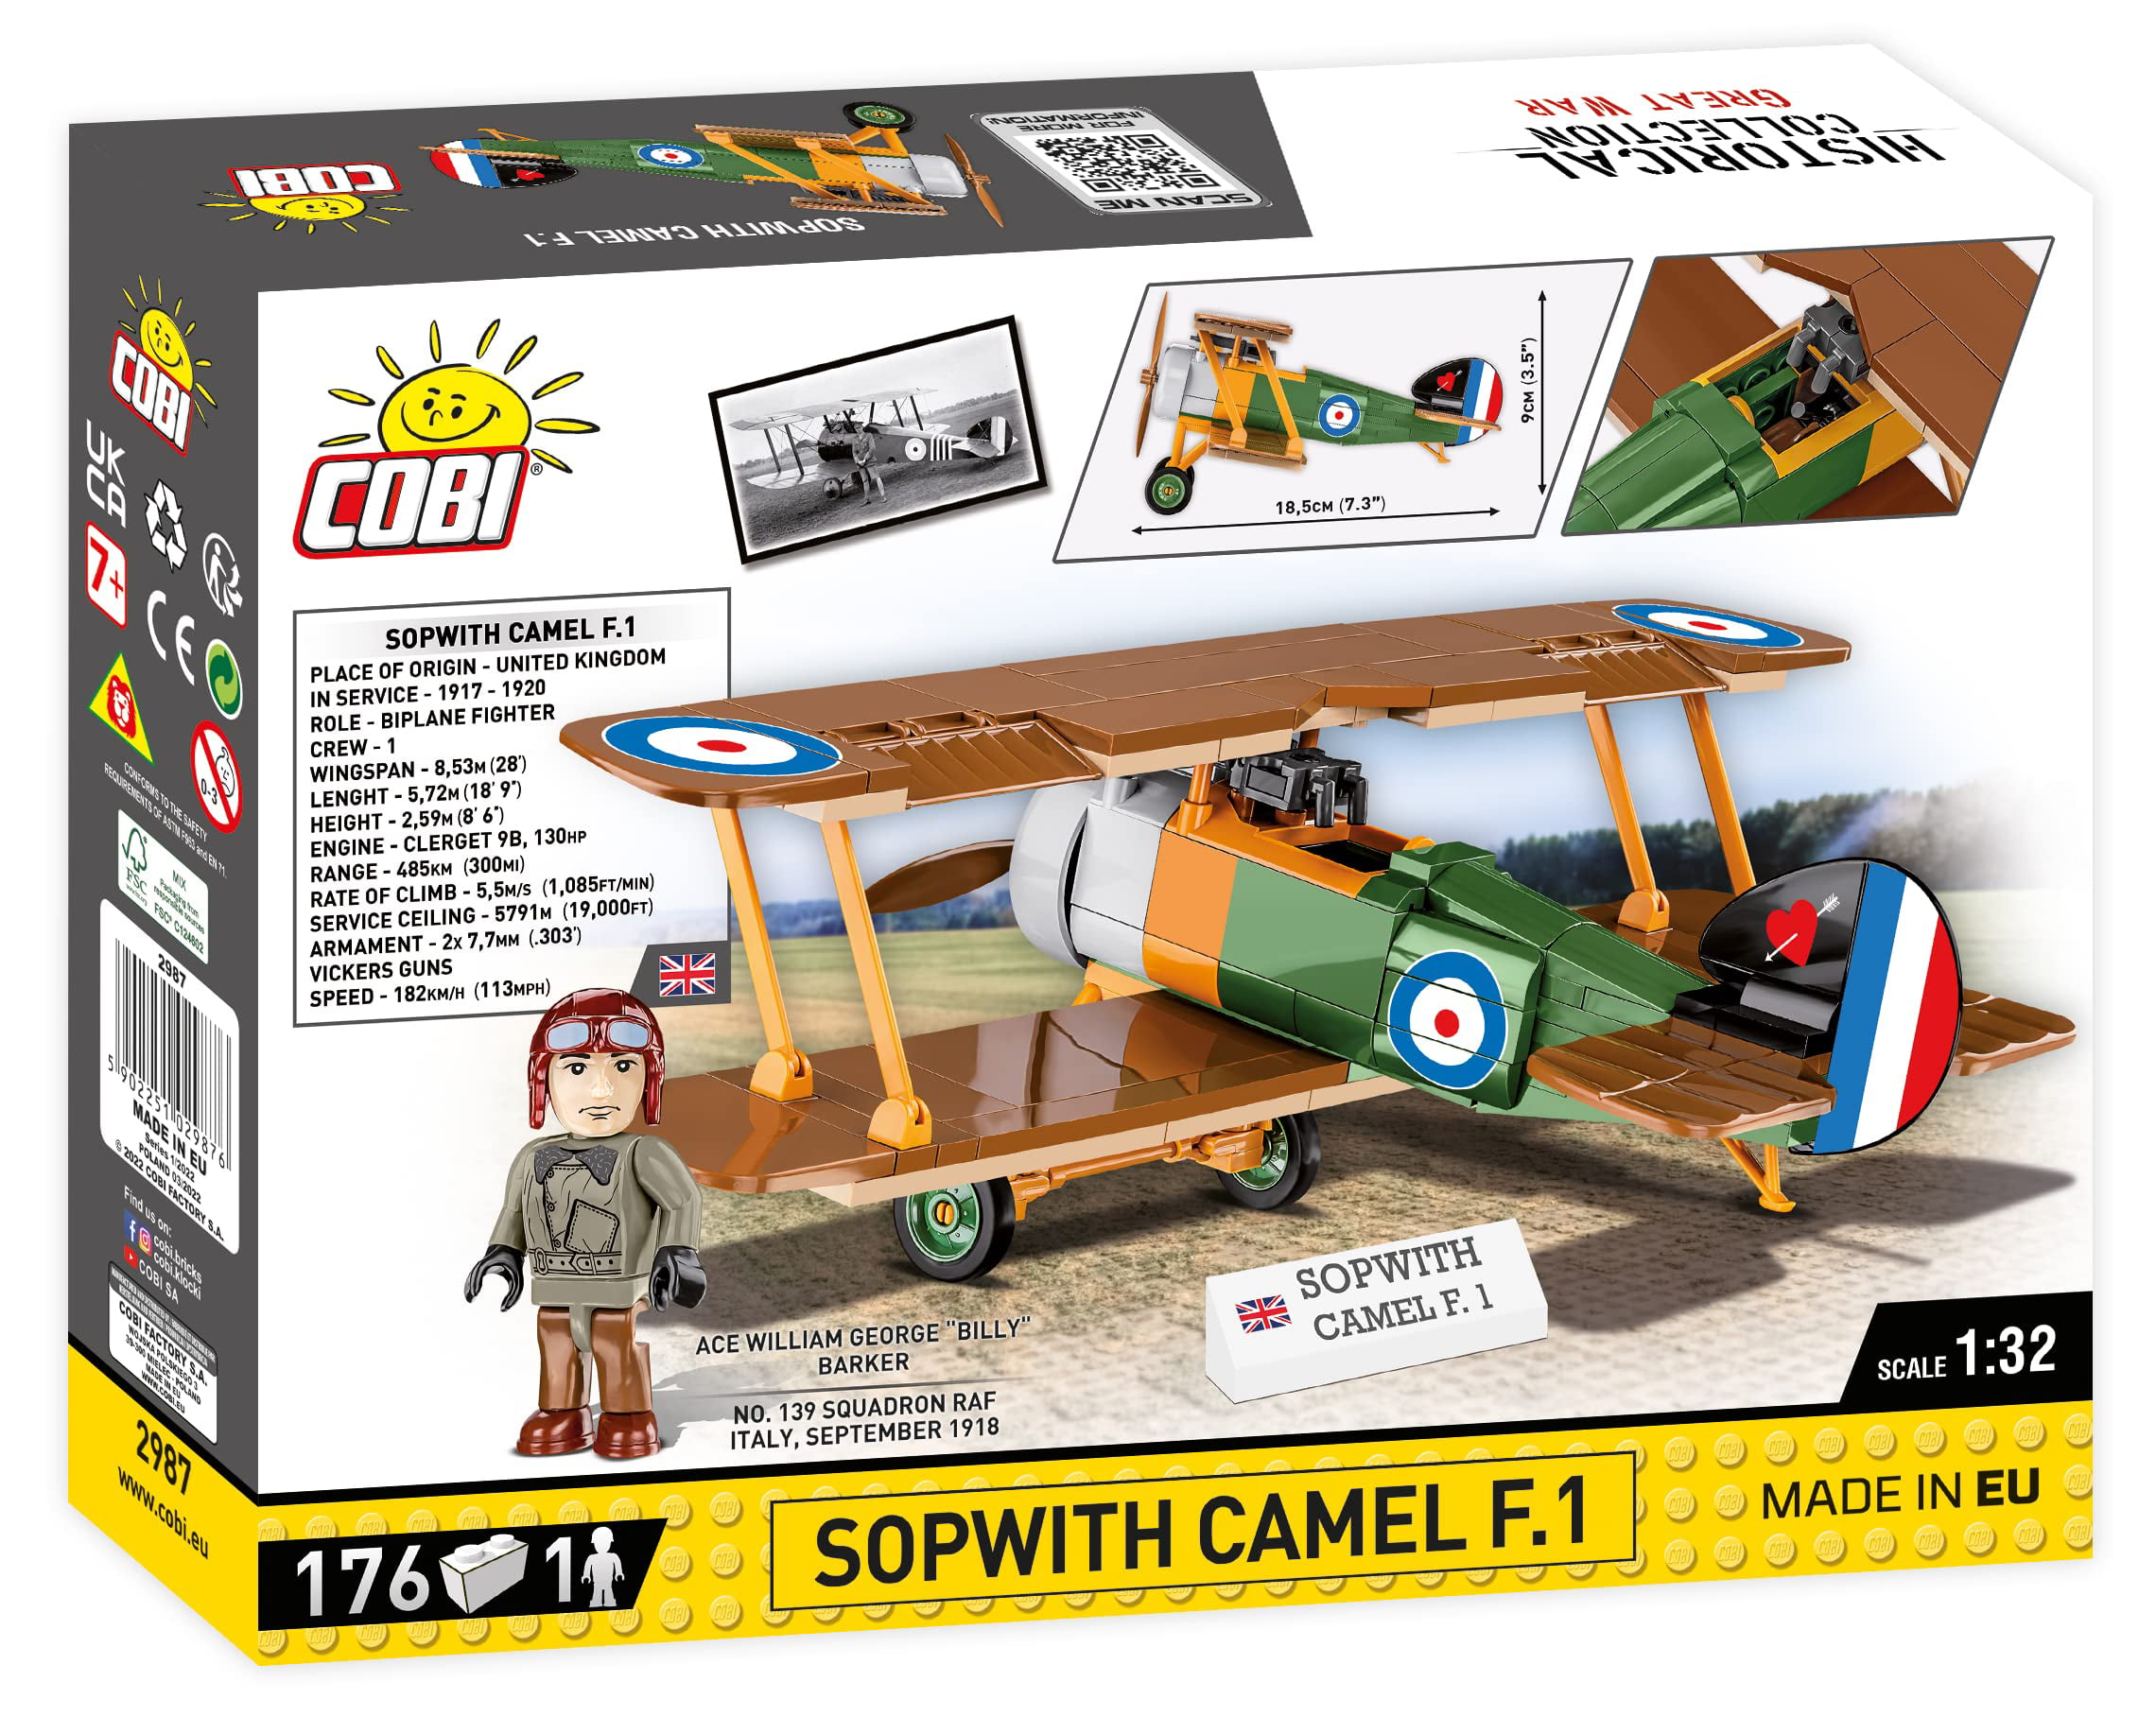 COBI TOYS #2987 Sopwith Camel F.1 WWI Plane NEW! - Walmart.com